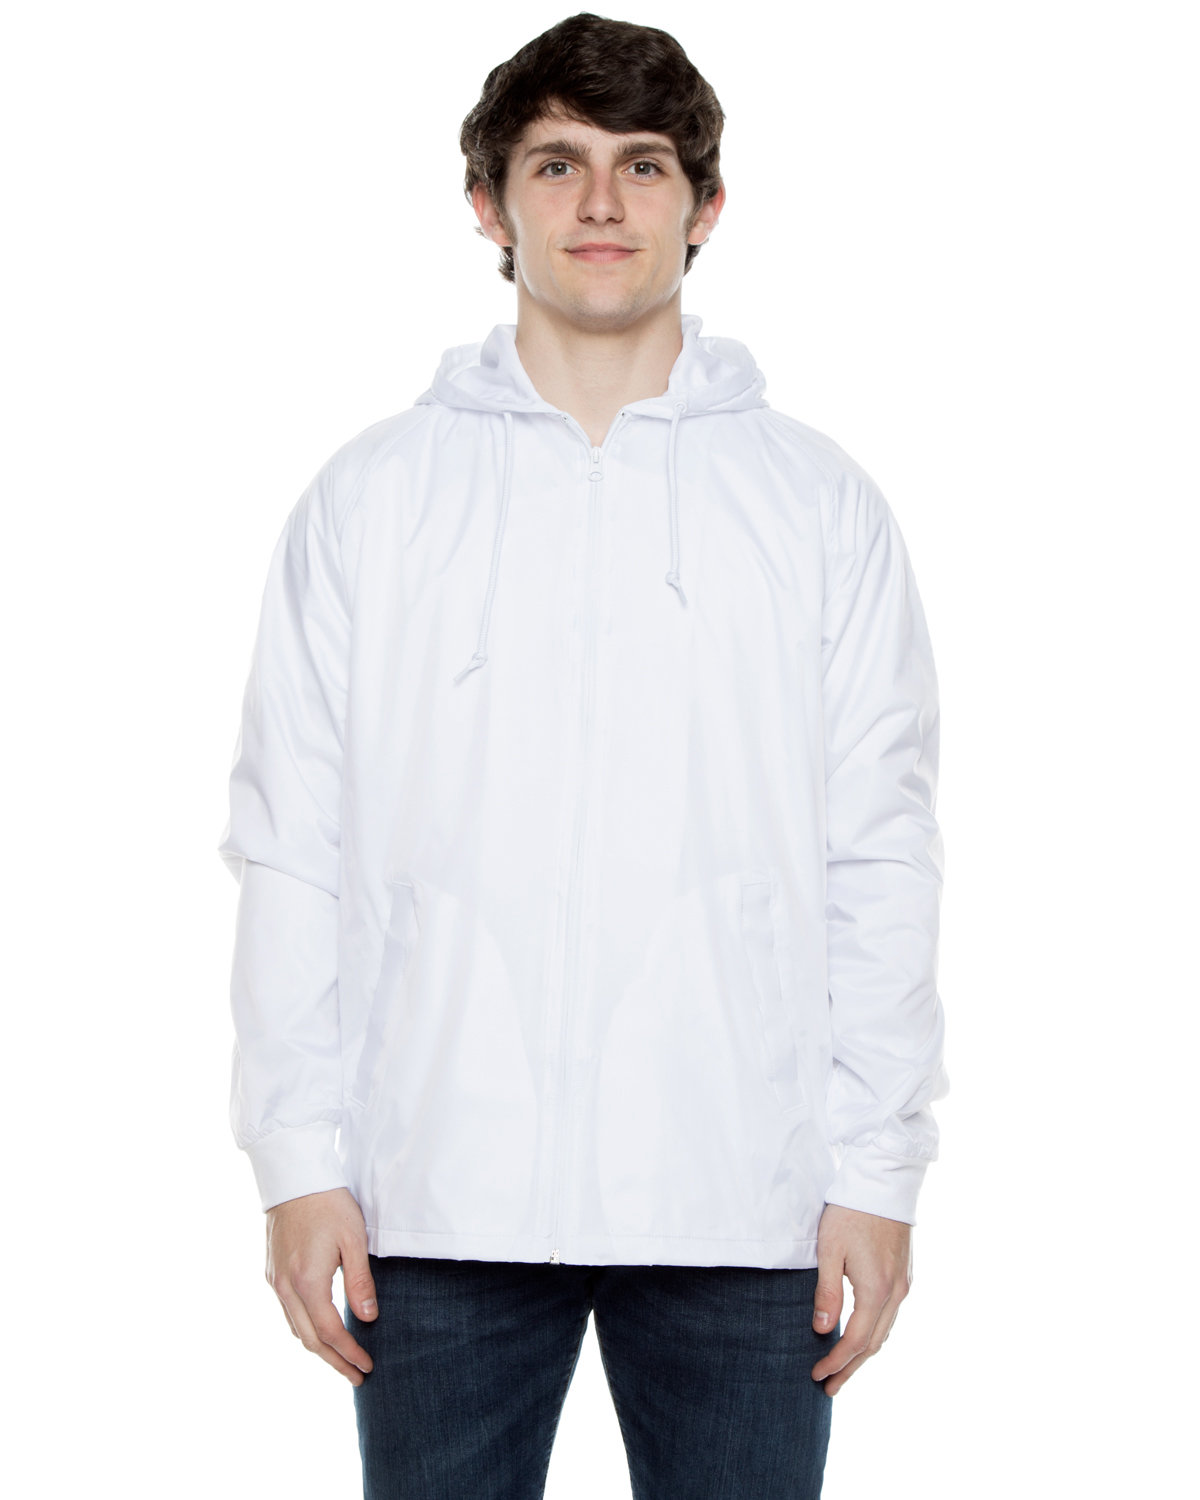 Beimar Drop Ship Unisex Nylon Full Zip Hooded Jacket WHITE 